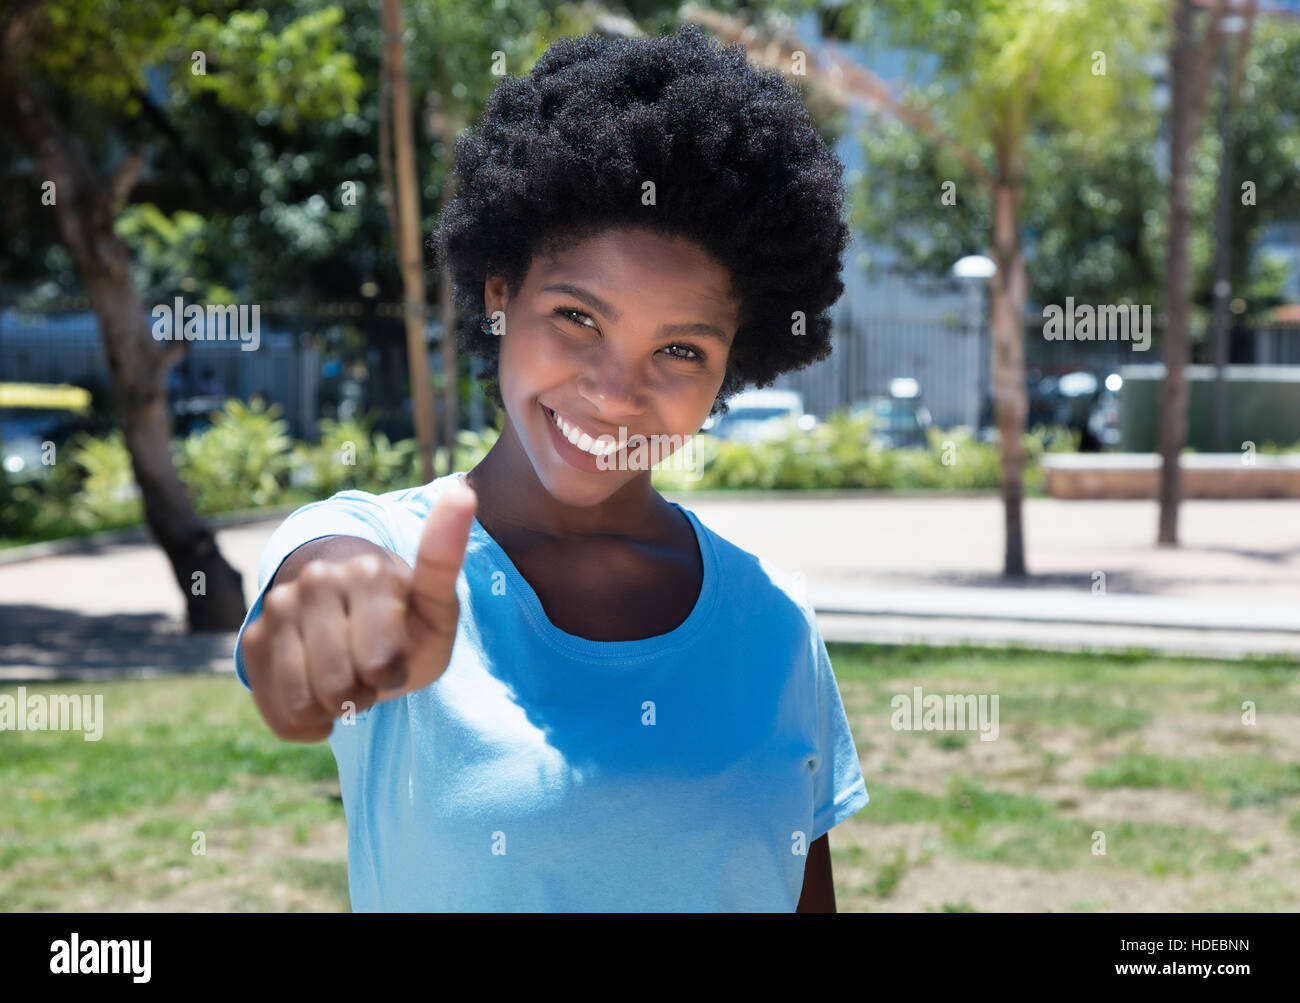 Felice African American Girl mostra il pollice all'aperto in un parco in estate Foto Stock